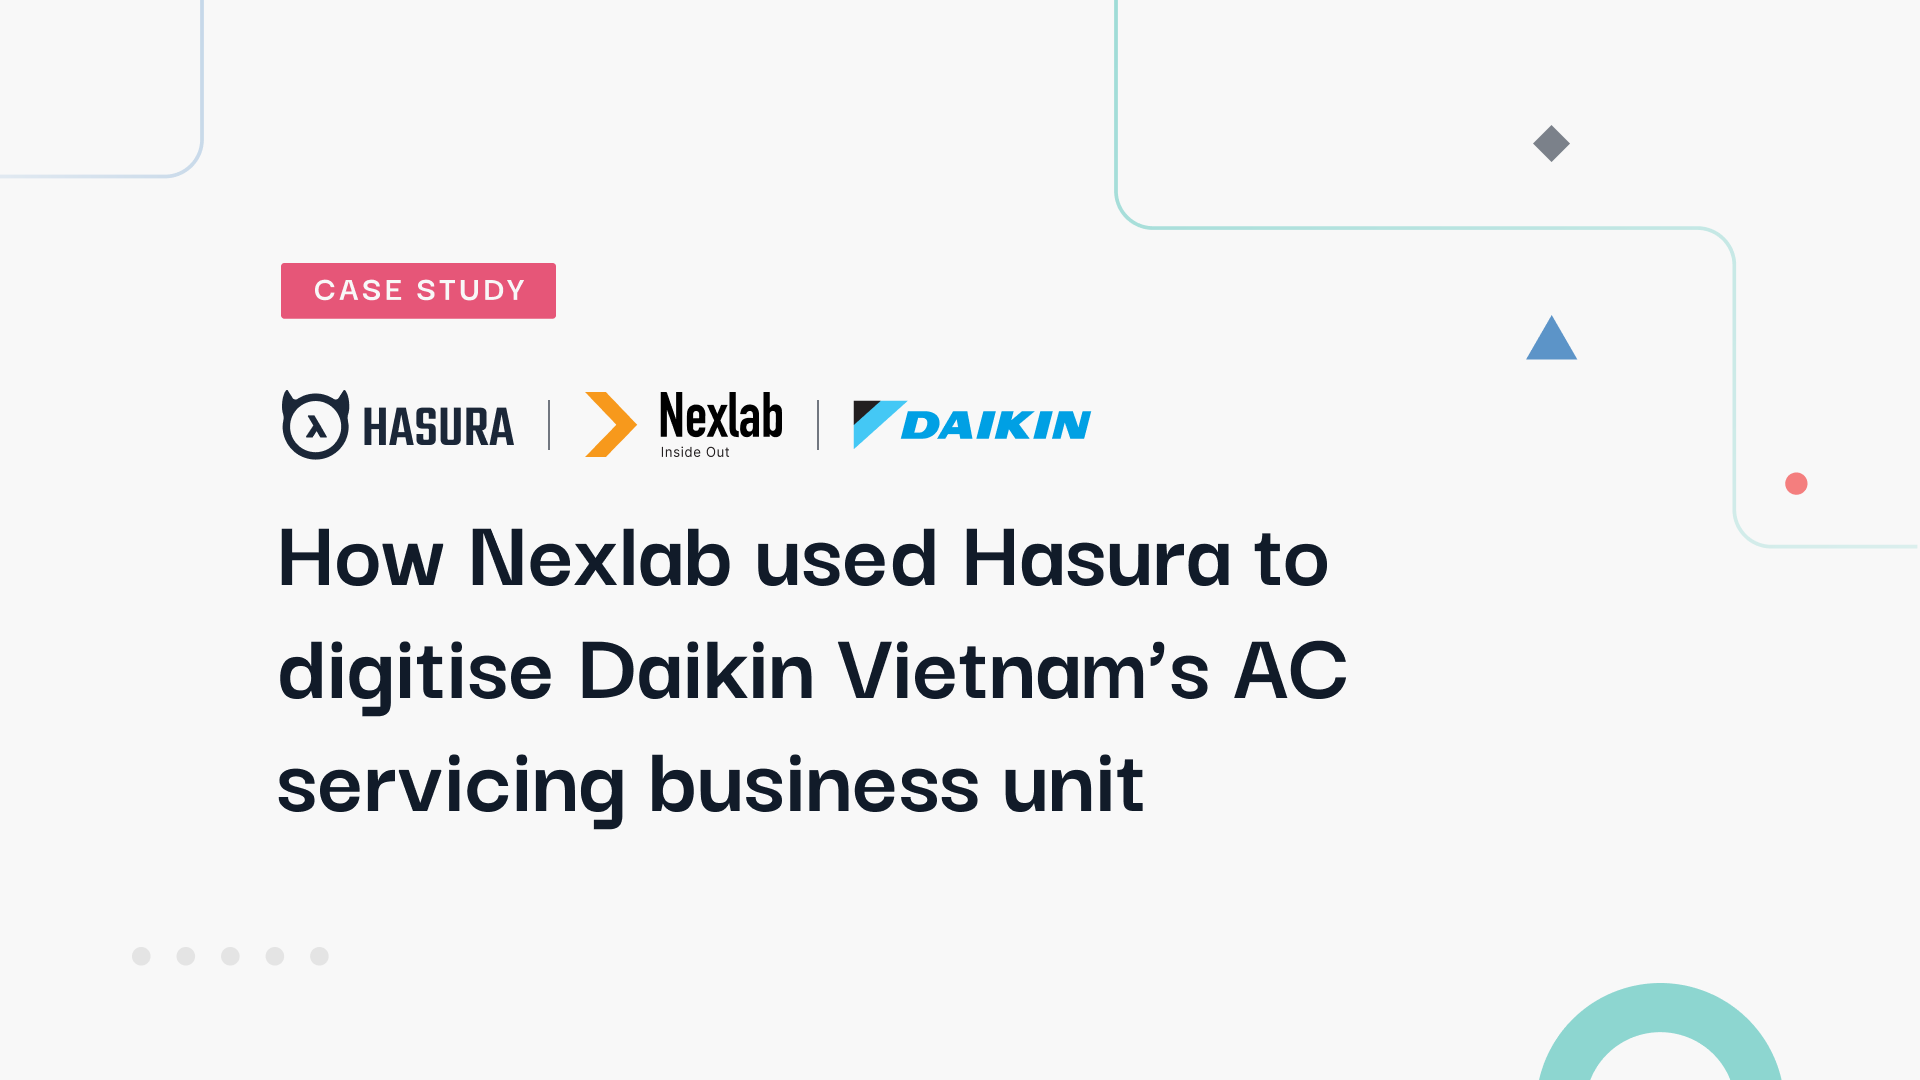 Case Study: How Nexlab used Hasura to digitize Daikin Vietnam’s AC servicing business unit